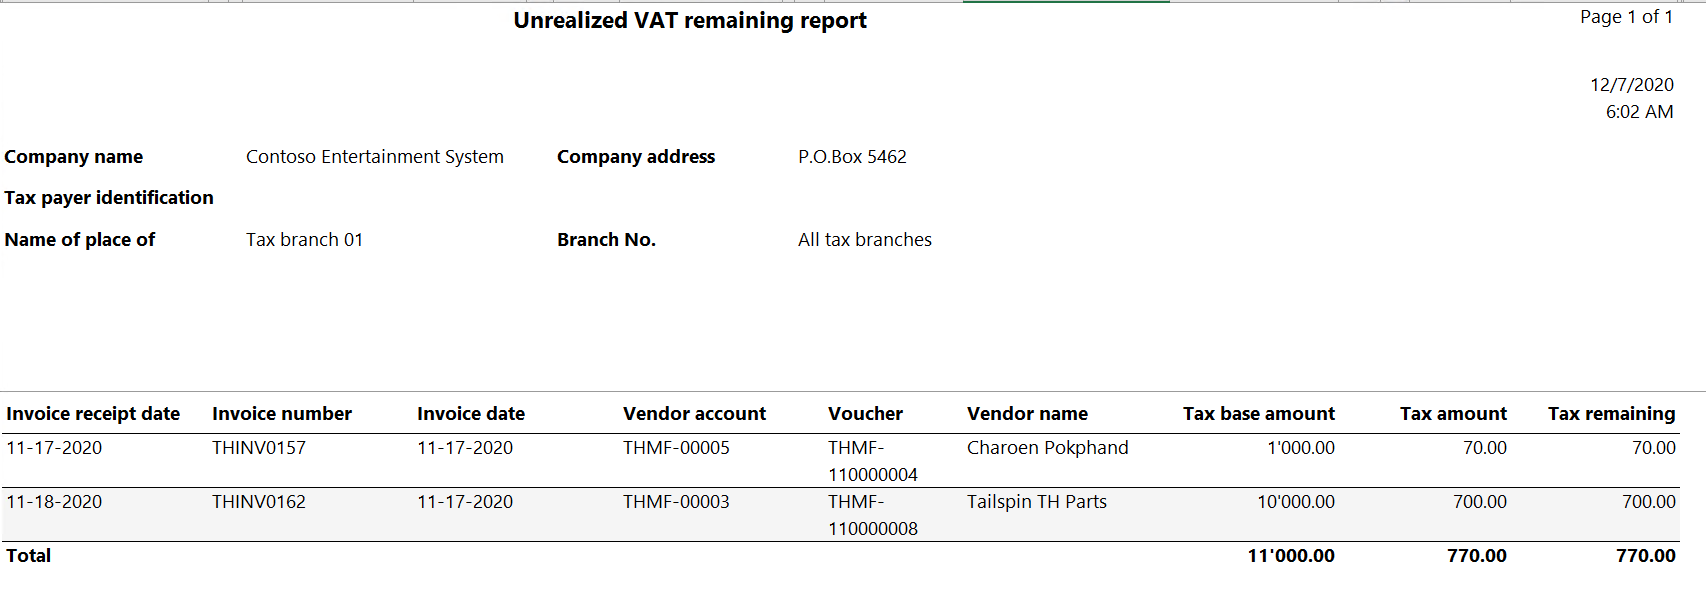 Unrealized VAT remaining report.